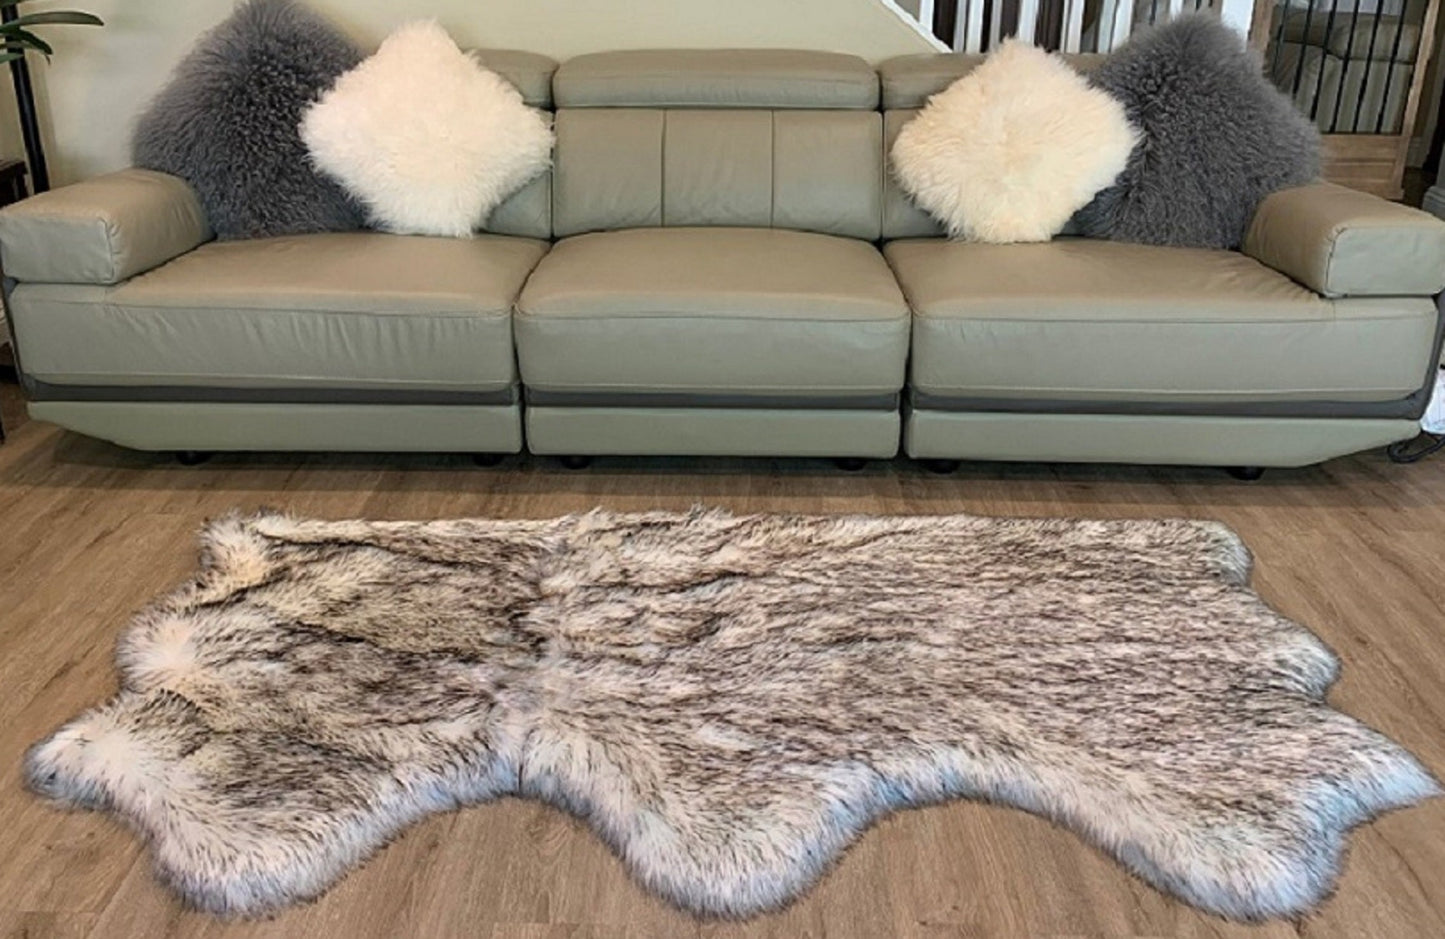 Faux  sheepskin rug Free Shape Three Pelt Side by Side 3'X6' (90cm x 180cm)